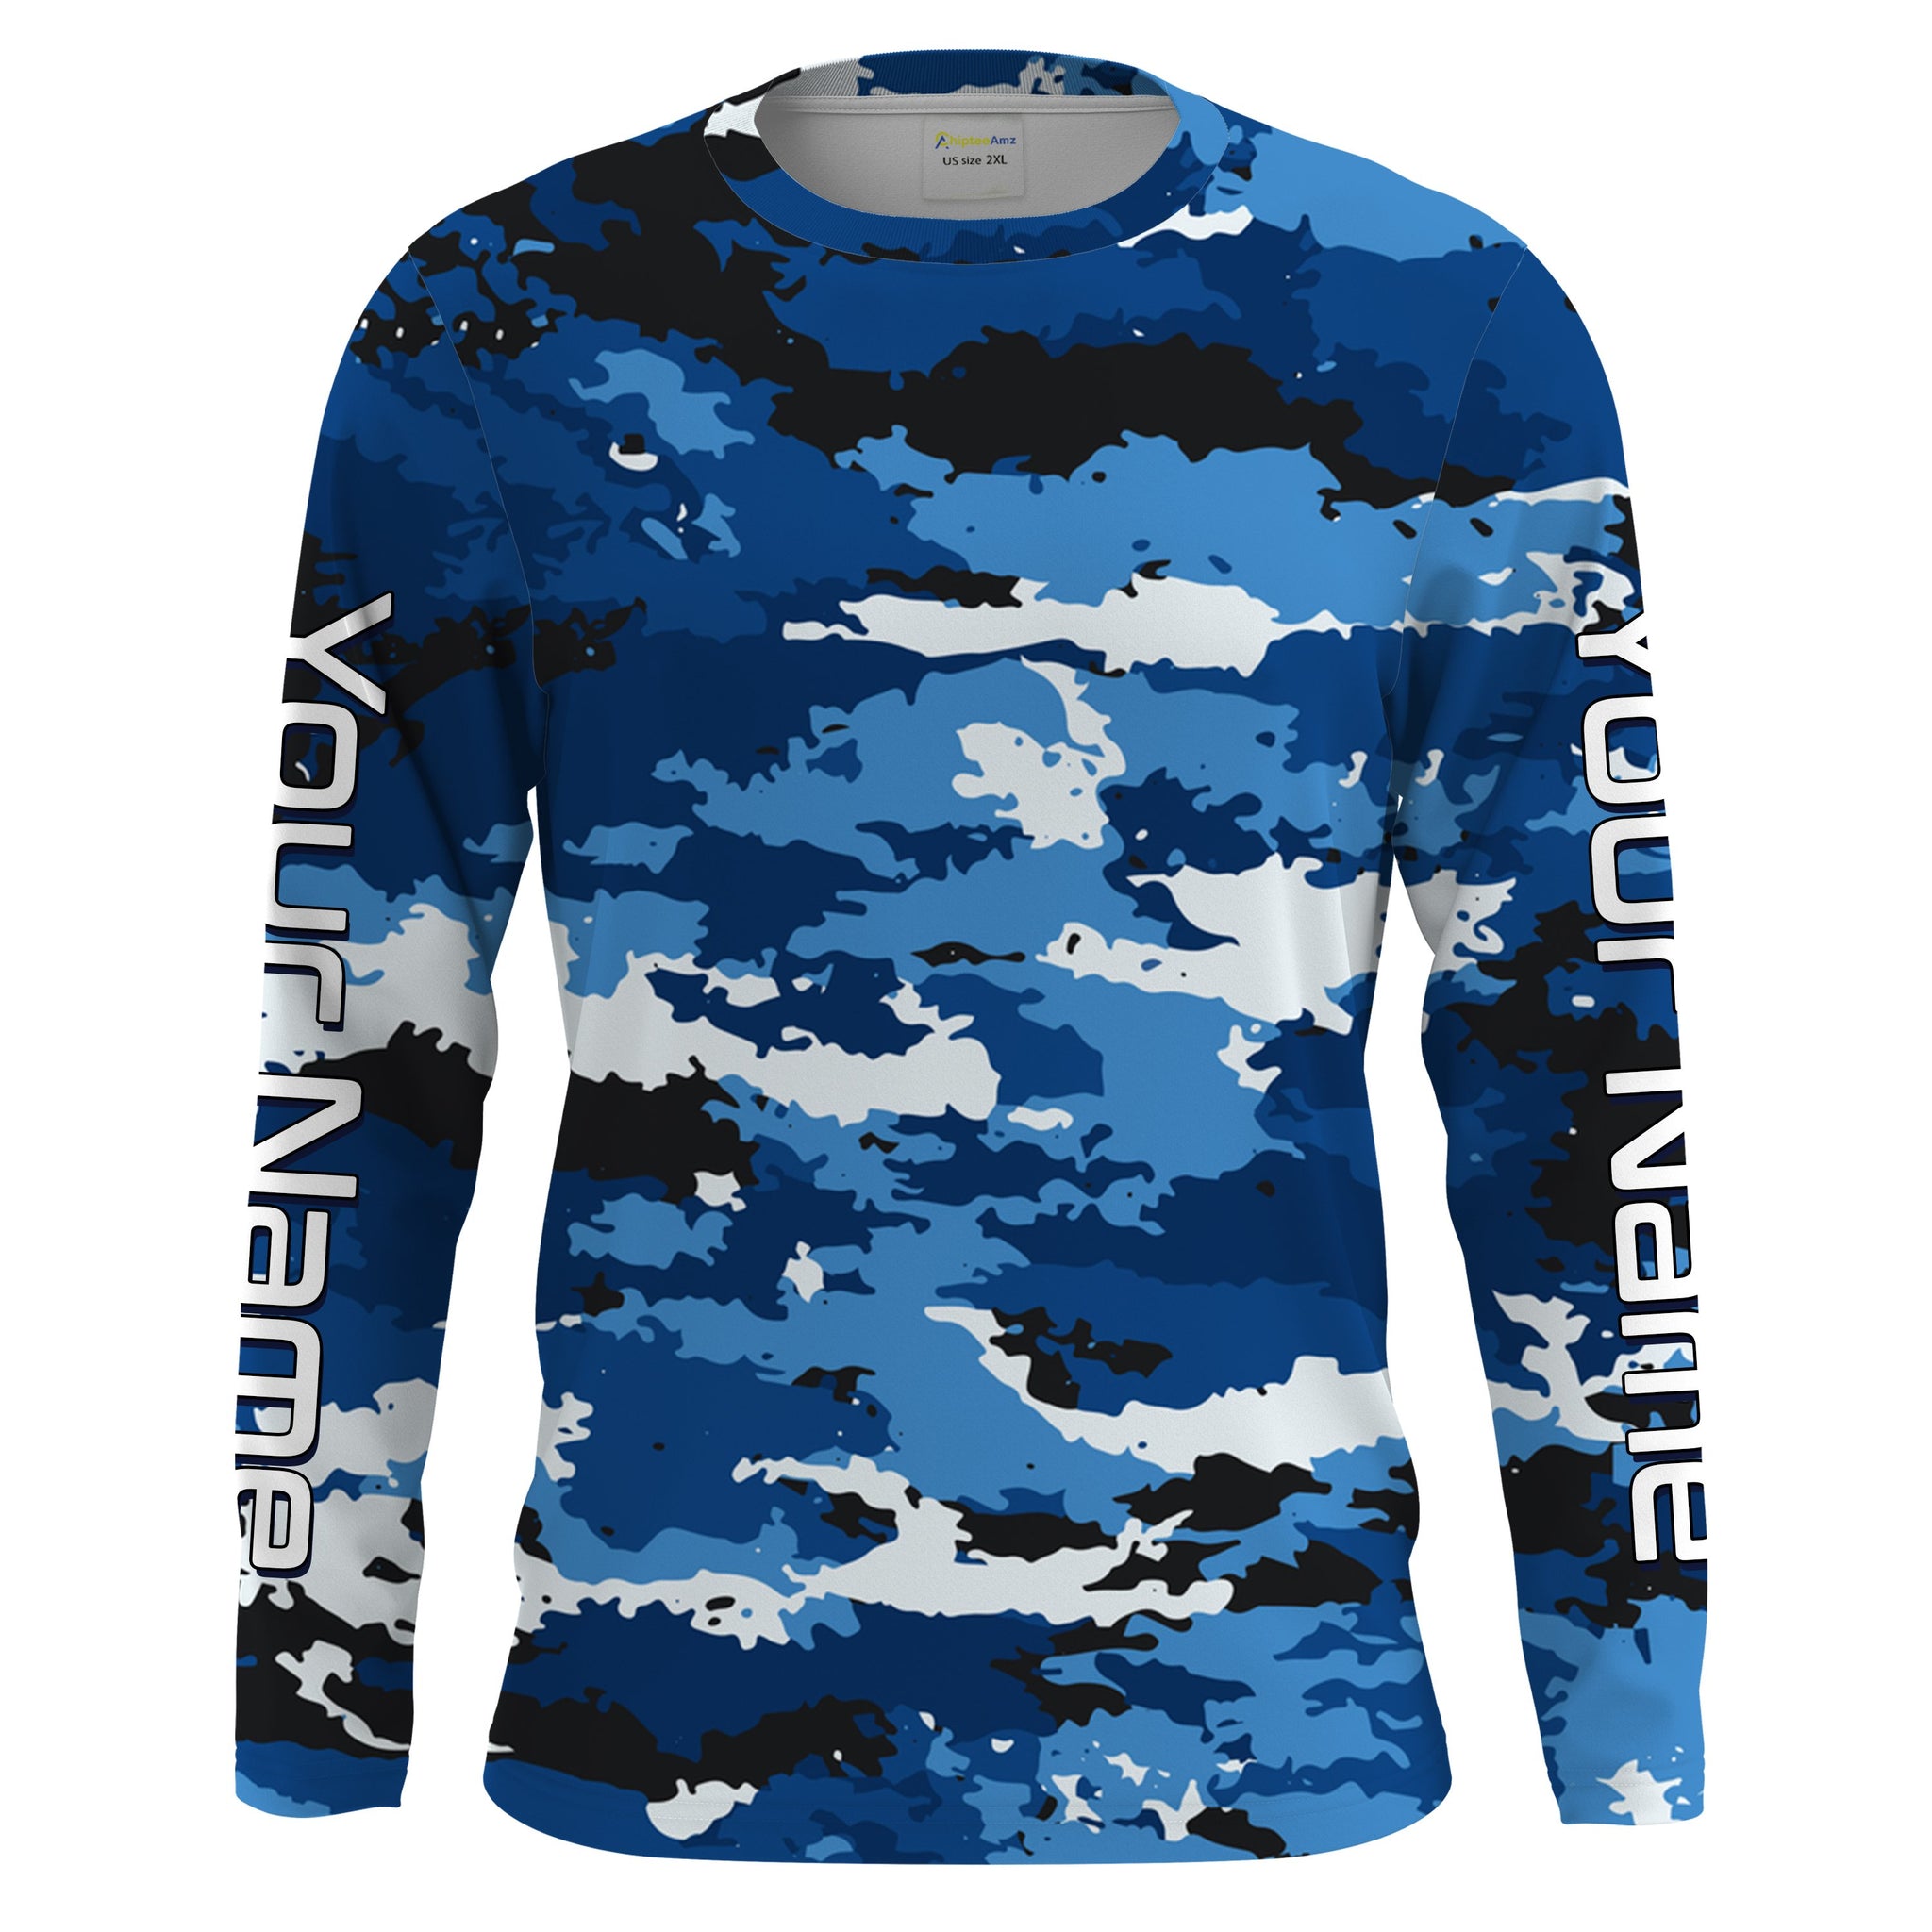 Blue camo Custom UV Long Sleeve performance Fishing Shirts, camouflage Fishing apparel - IPHW1580